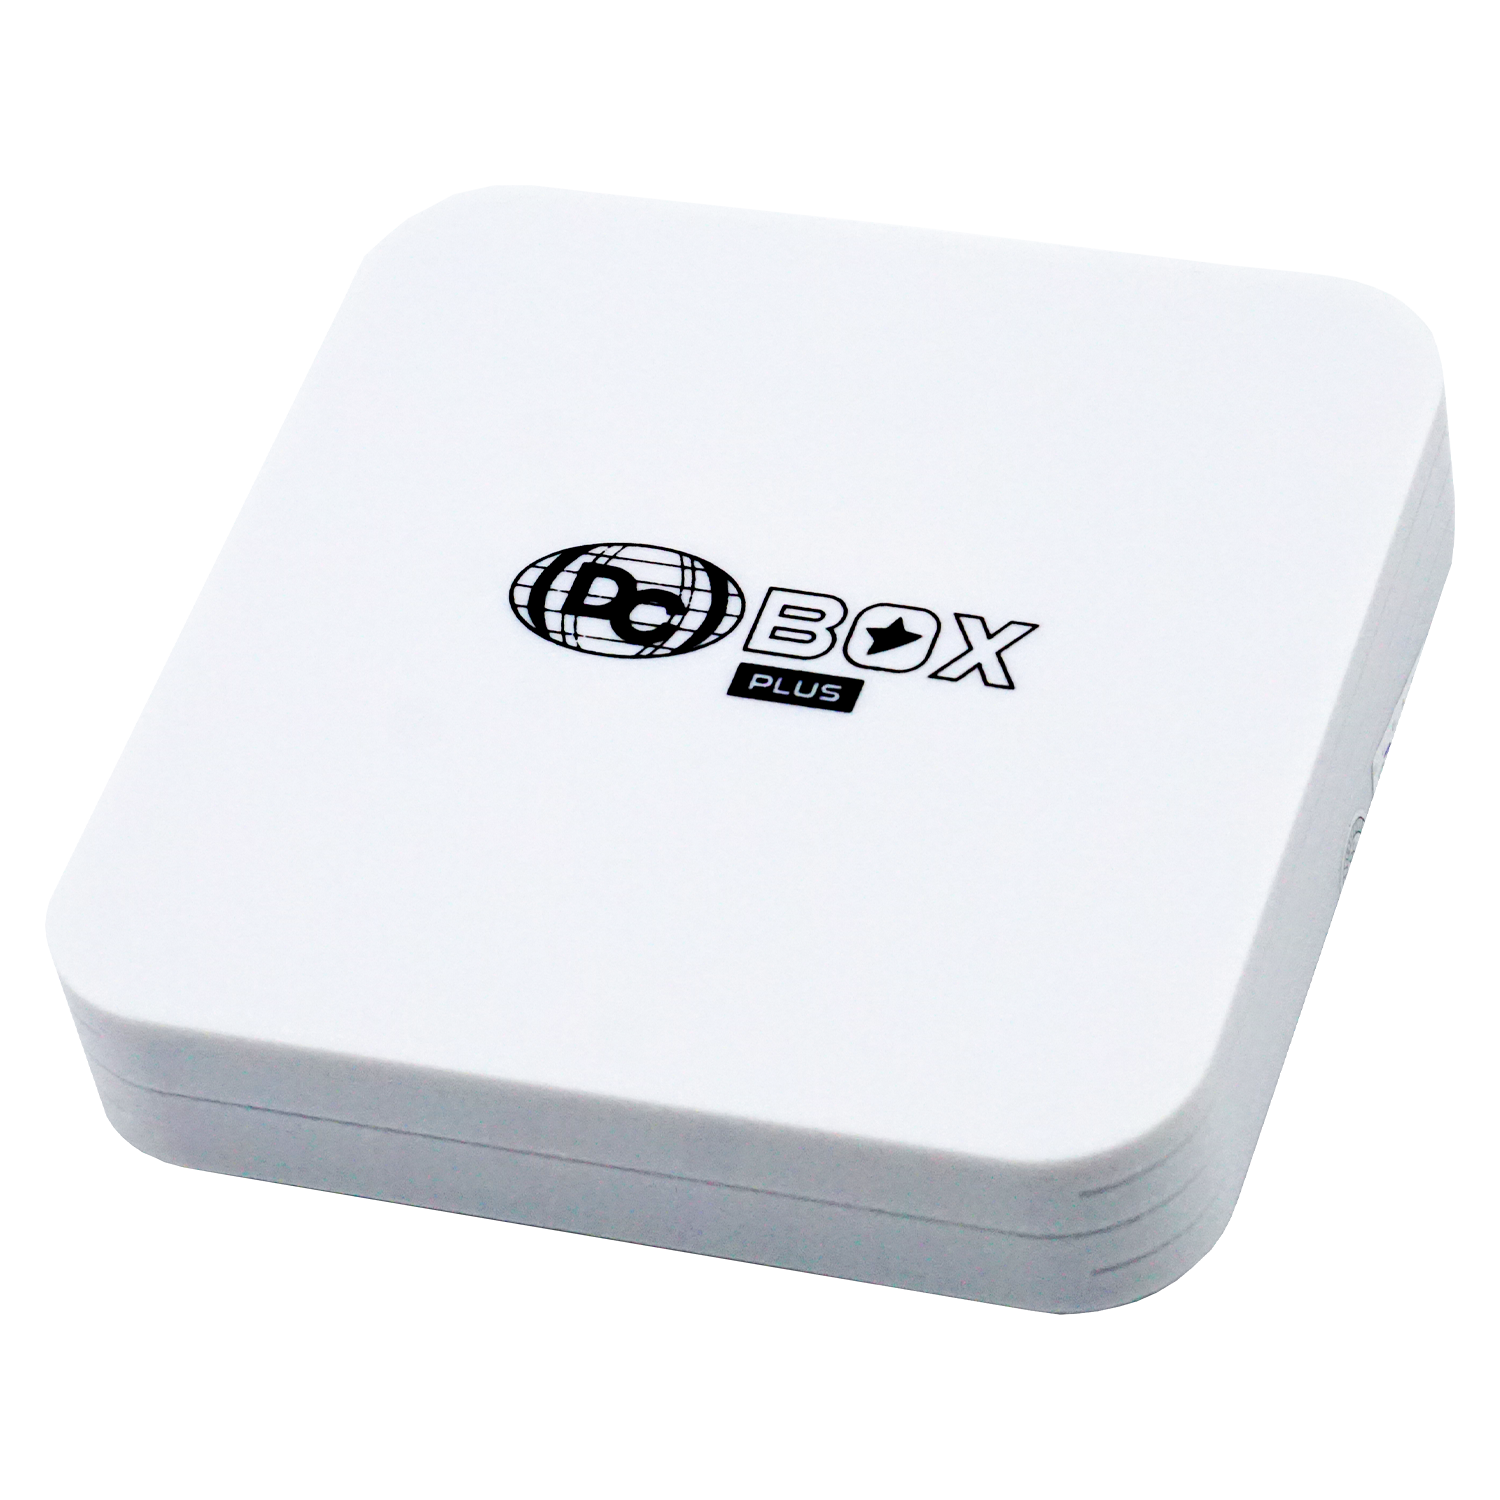 Receptor TV Box DC Box Plus 32GB / 256GB / Android 10.1 5G - Branco